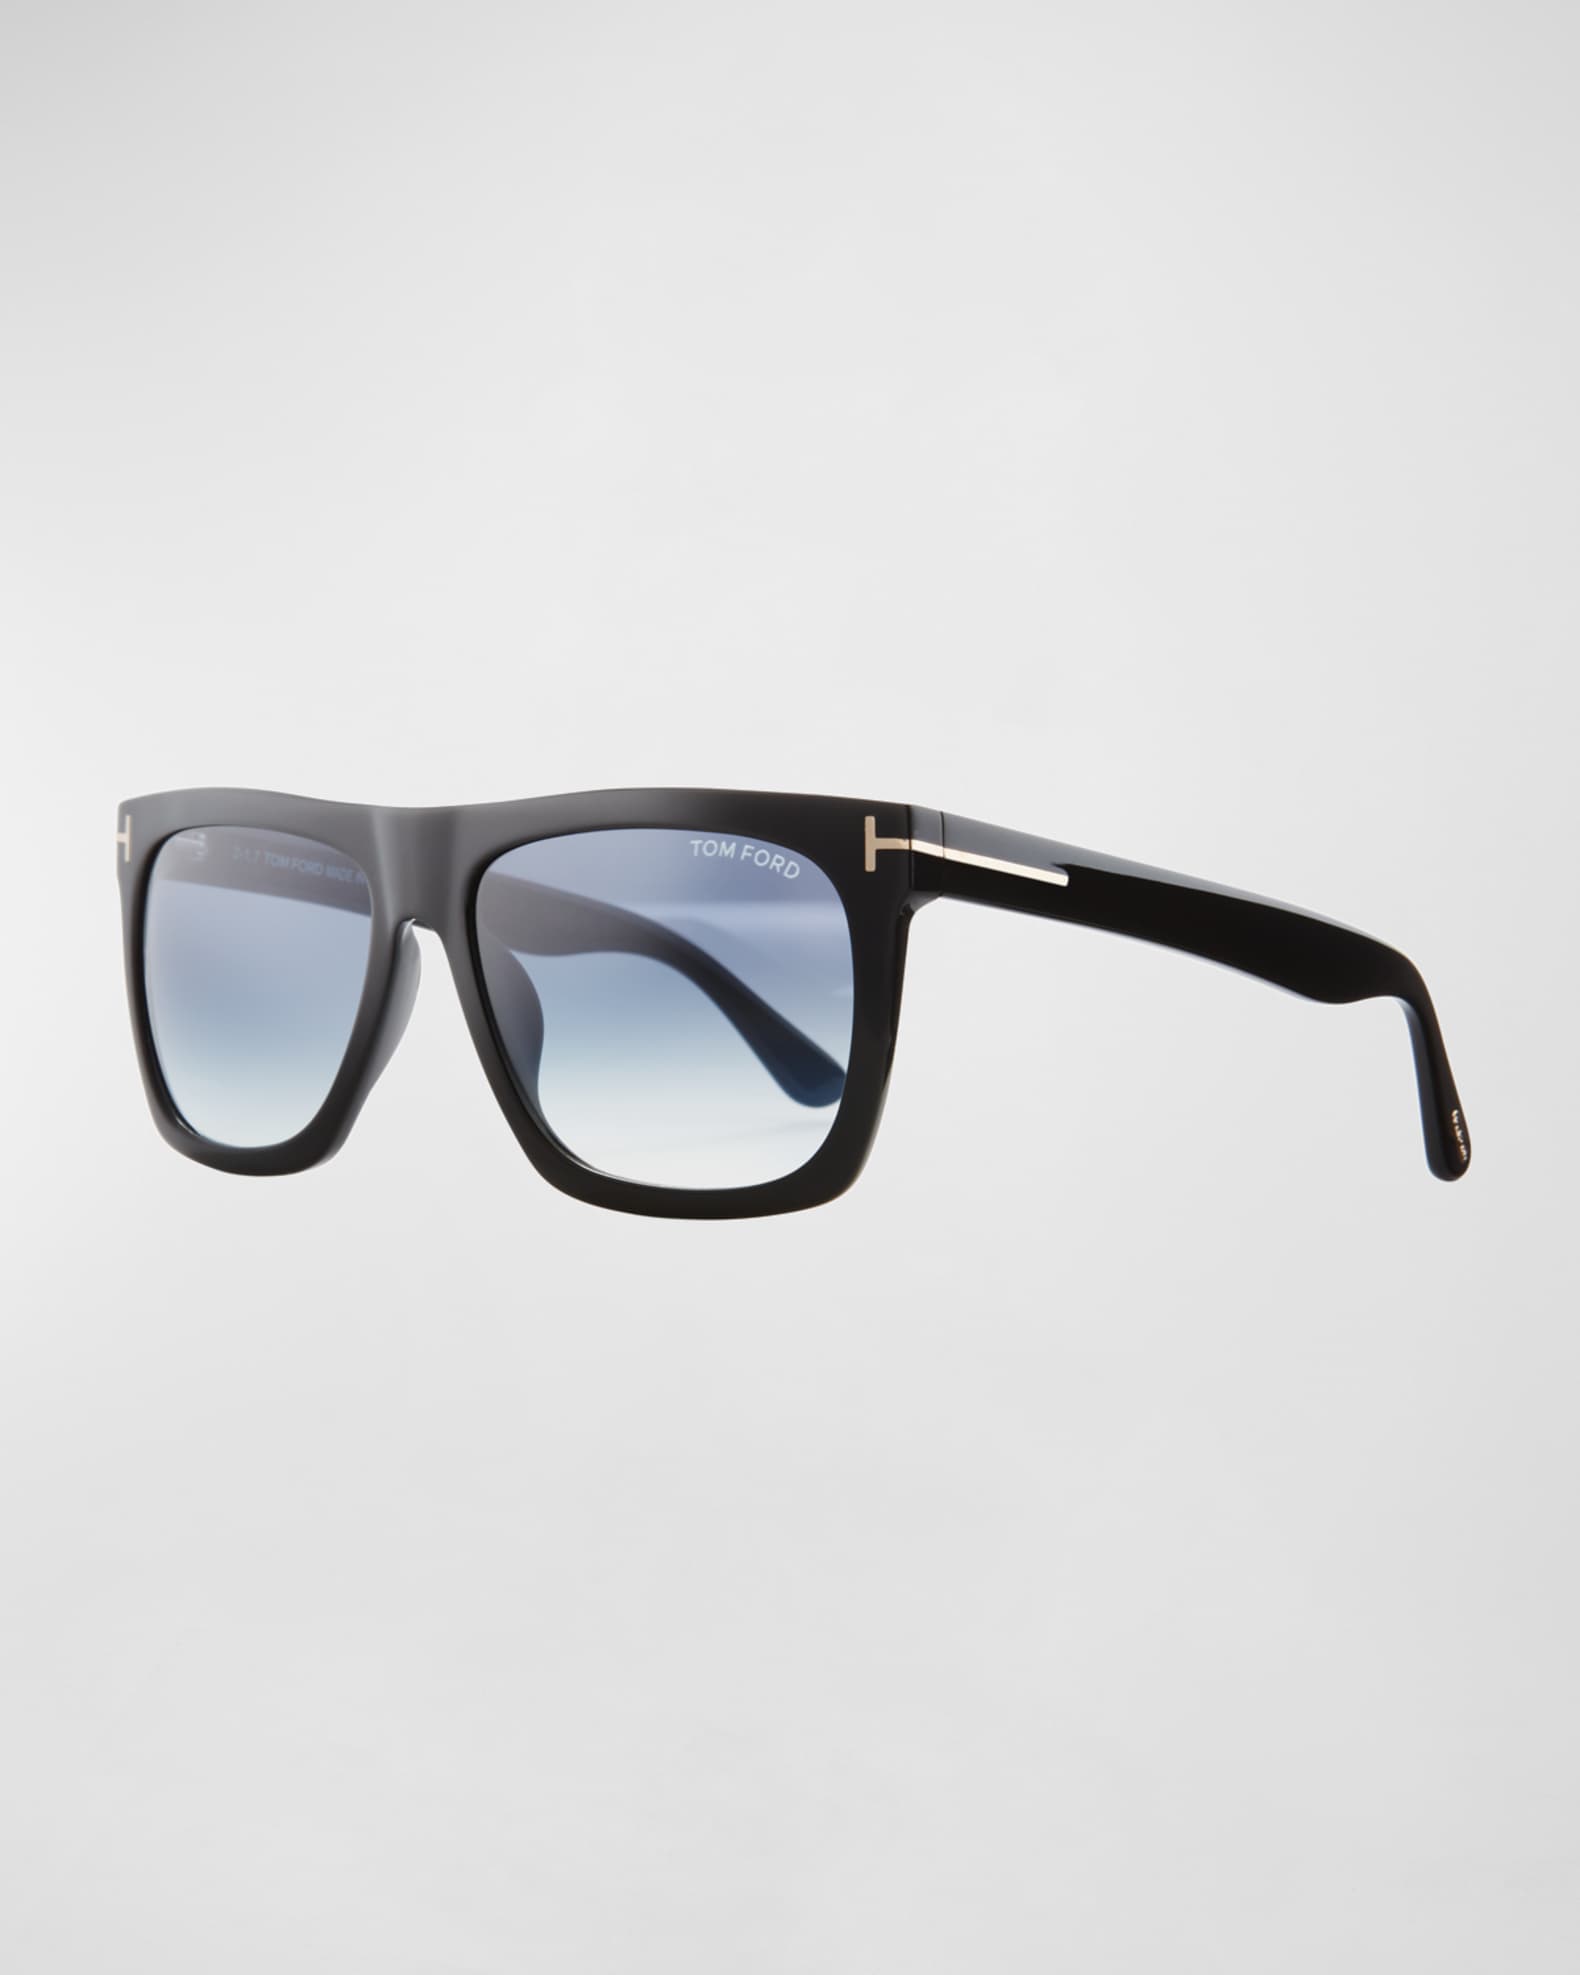 Morgan Thick Square Acetate Sunglasses, Black/Blue 0